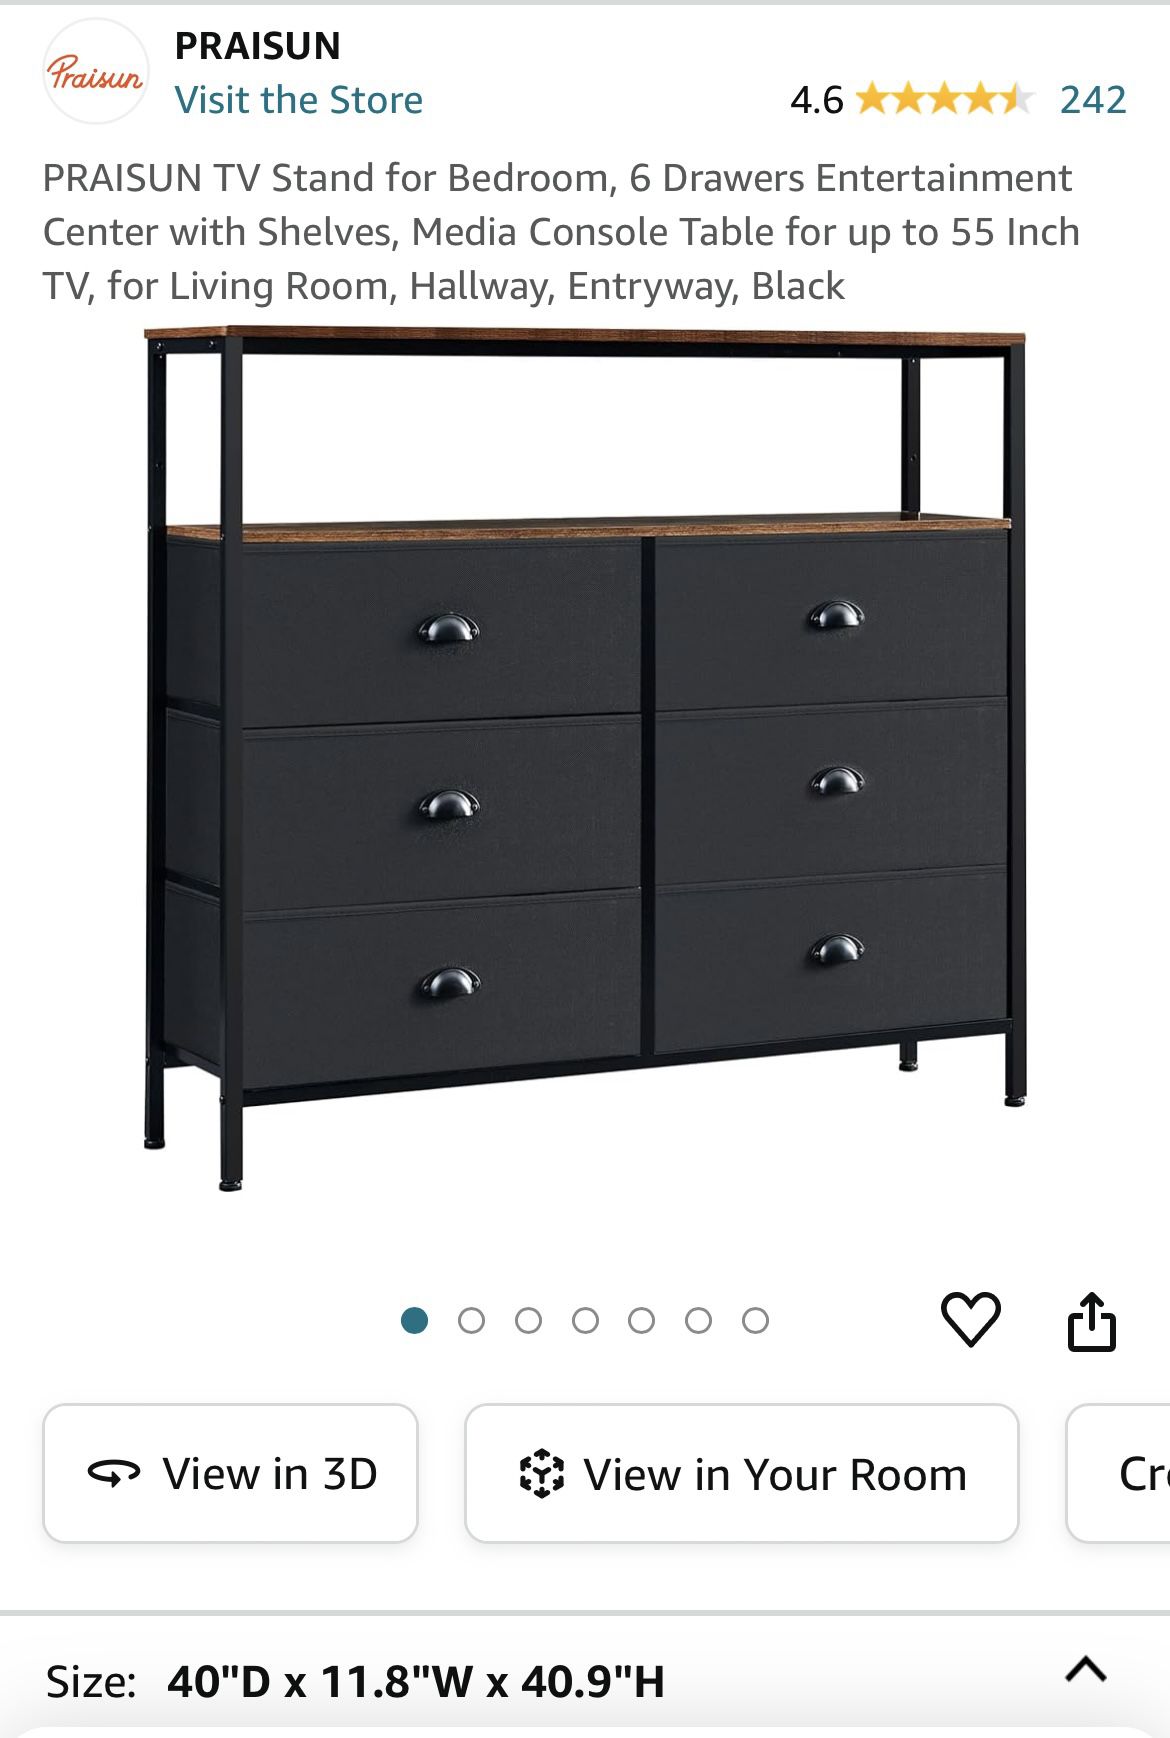 PRAISUN Larger Dresser for Bedroom, 6 Drawers, TV Stand